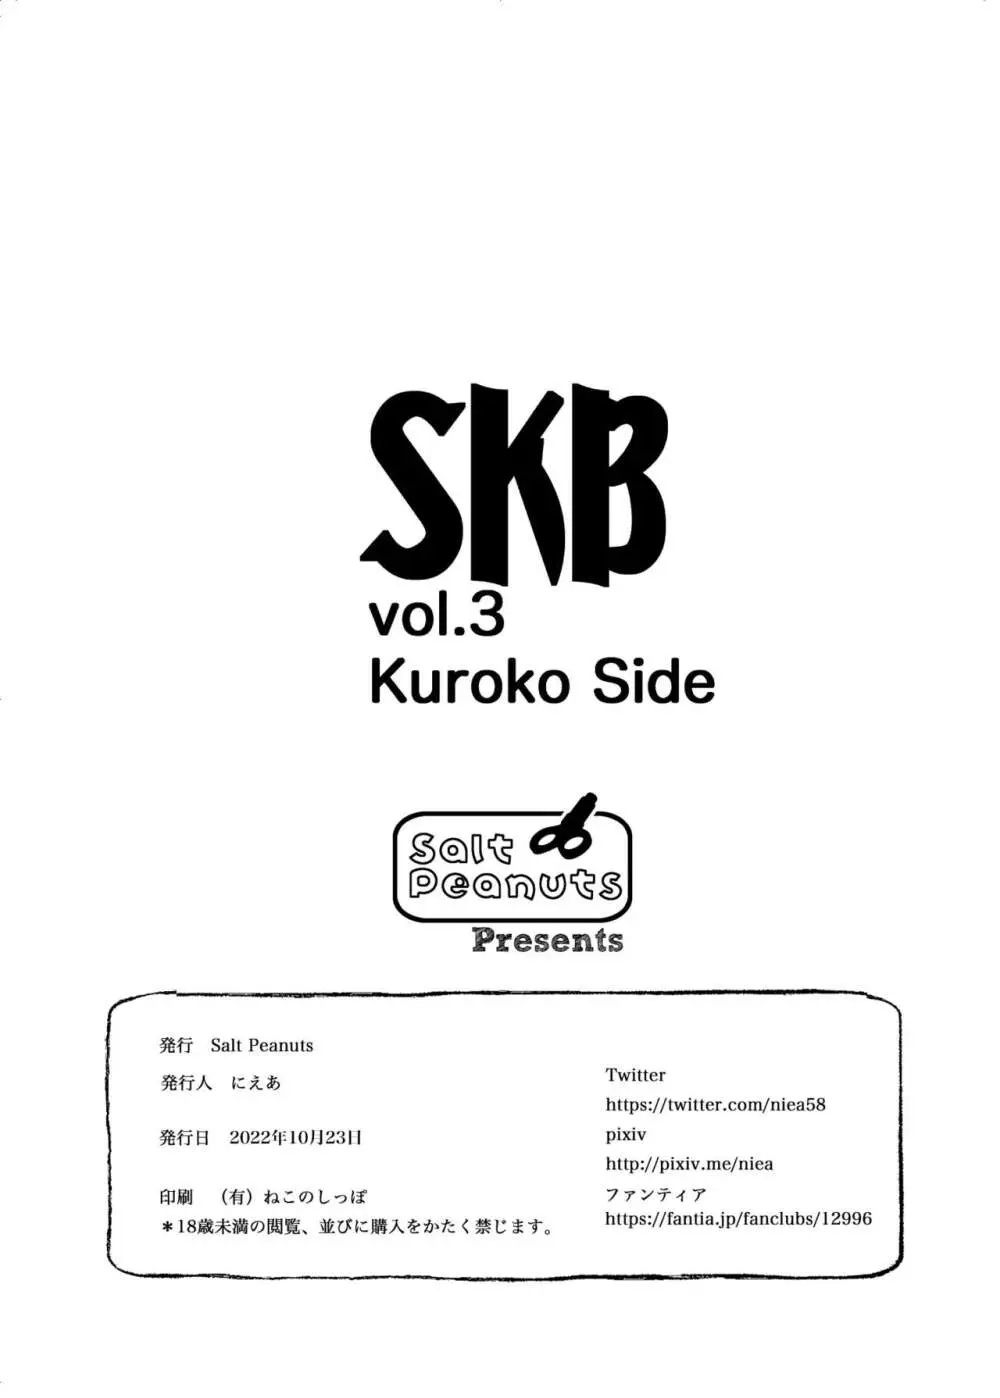 Skeb vol.3 Kuroko Side